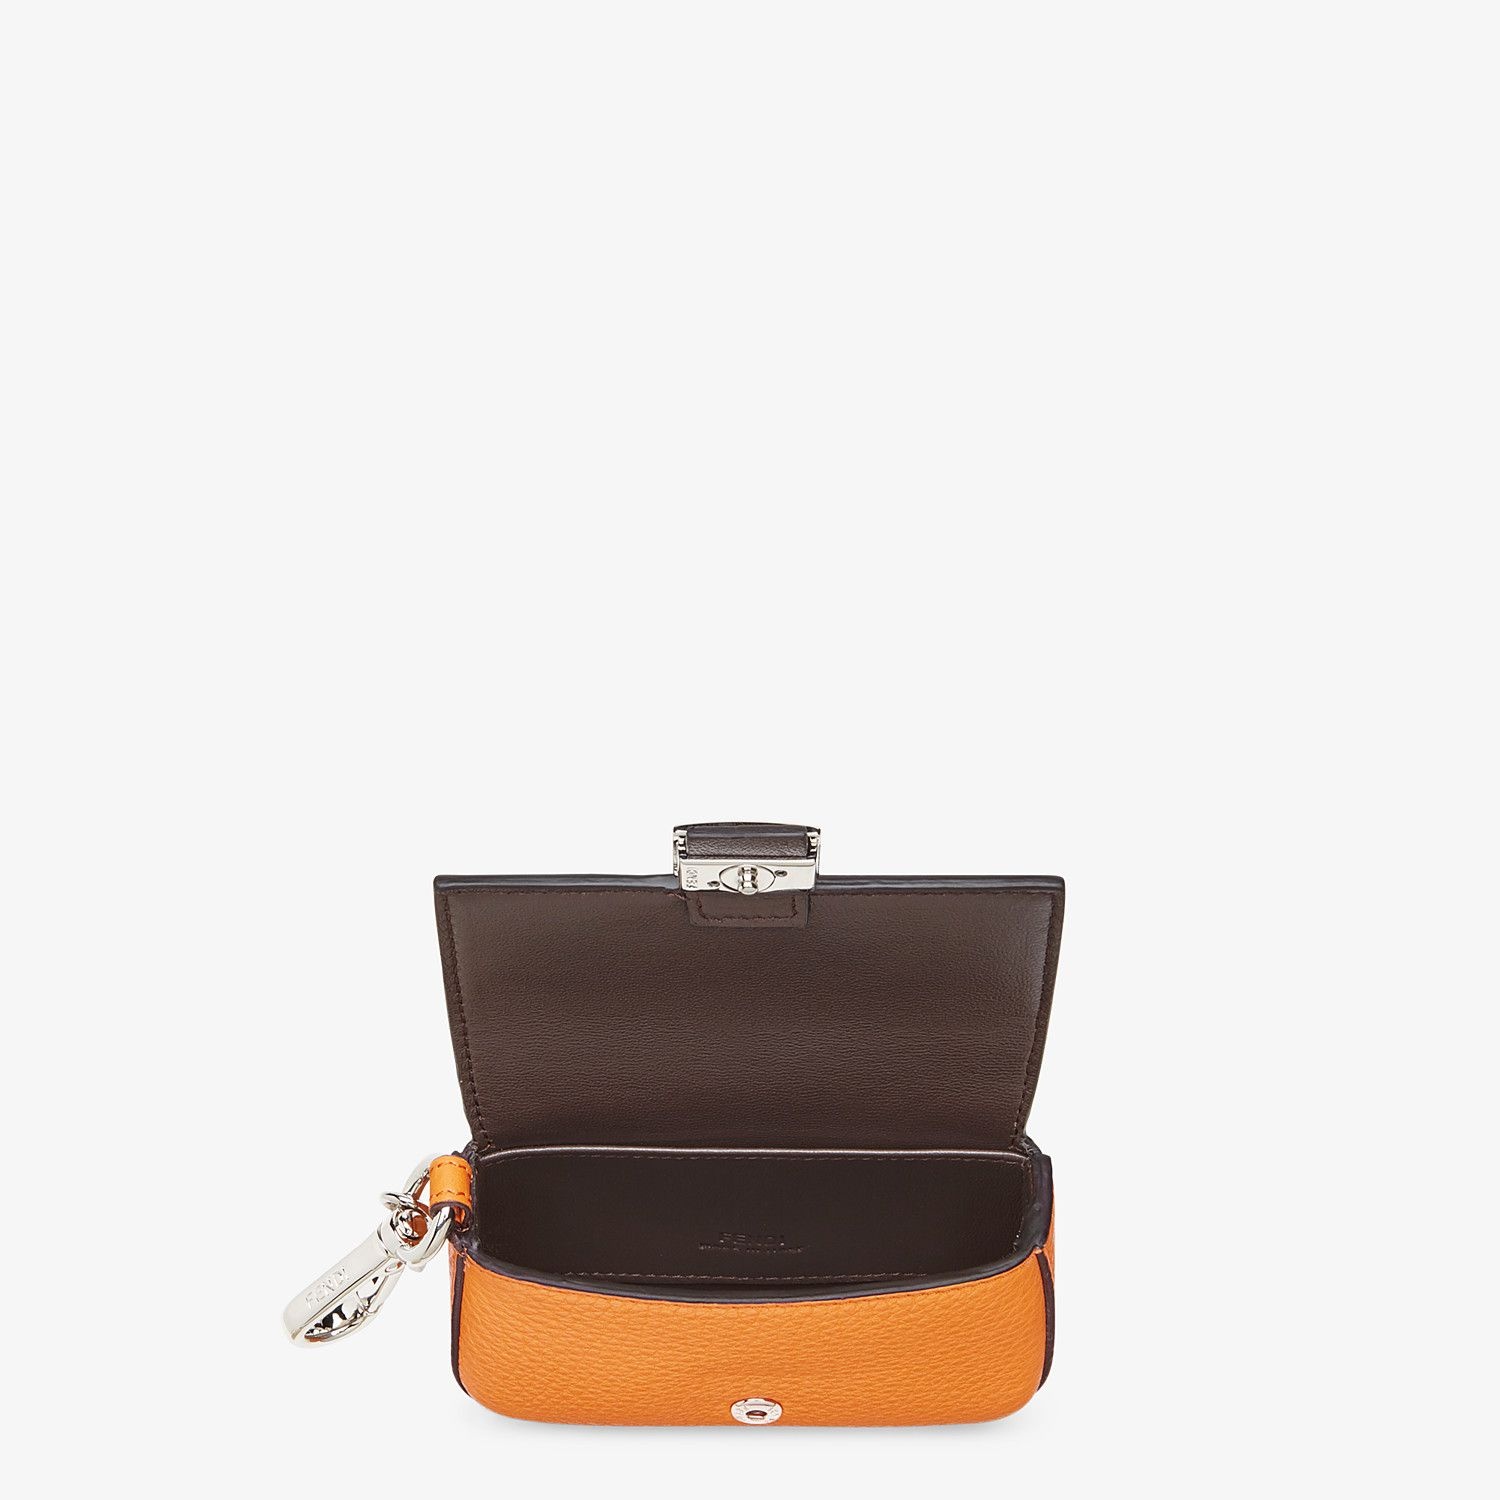 Orange leather charm - 3